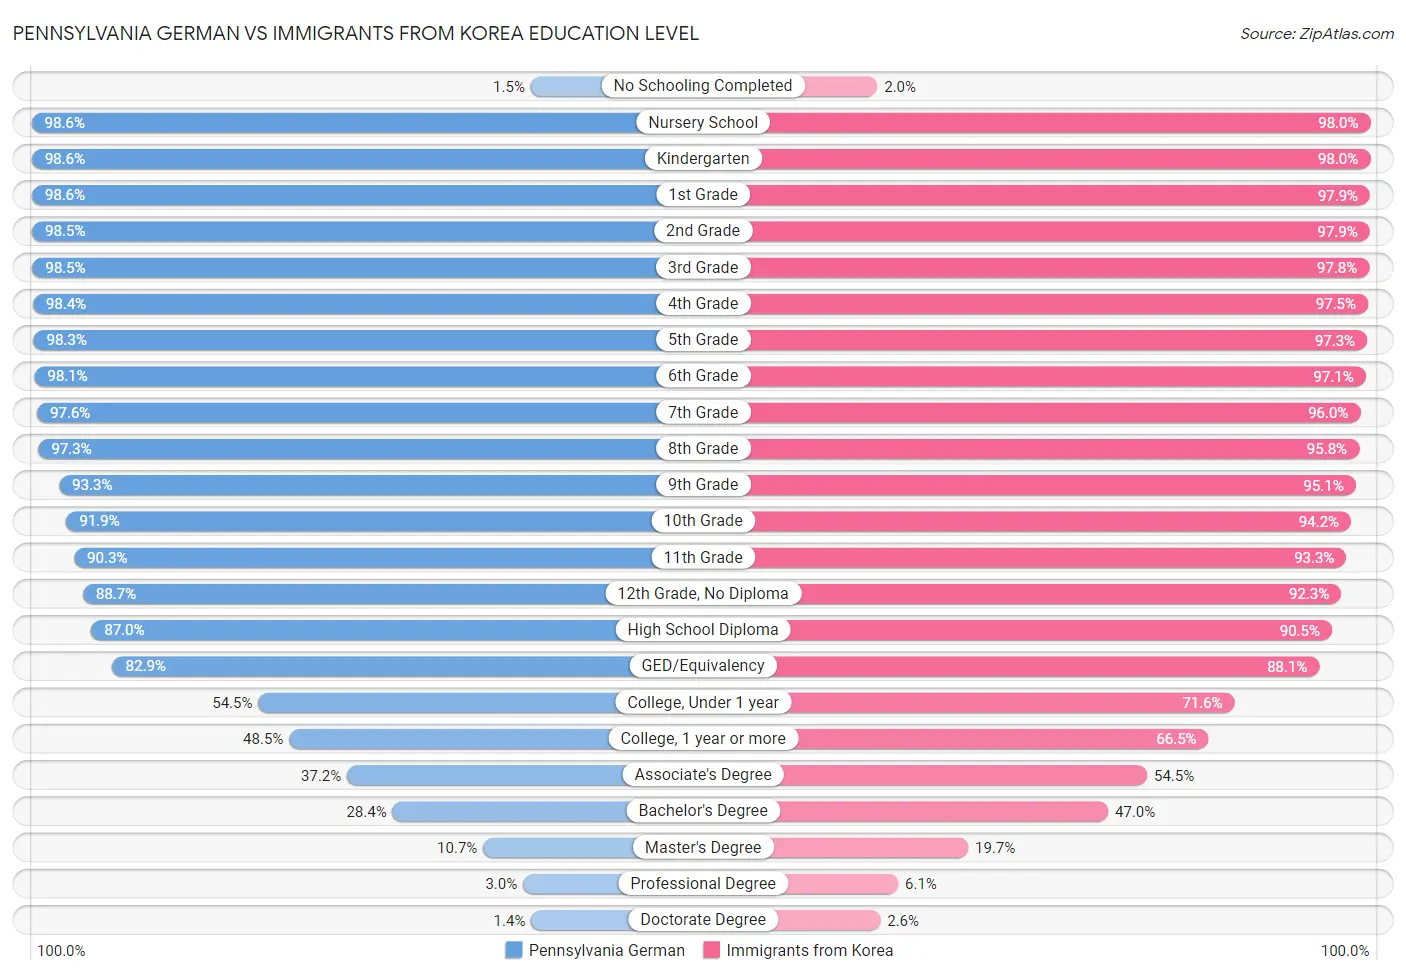 Pennsylvania German vs Immigrants from Korea Education Level